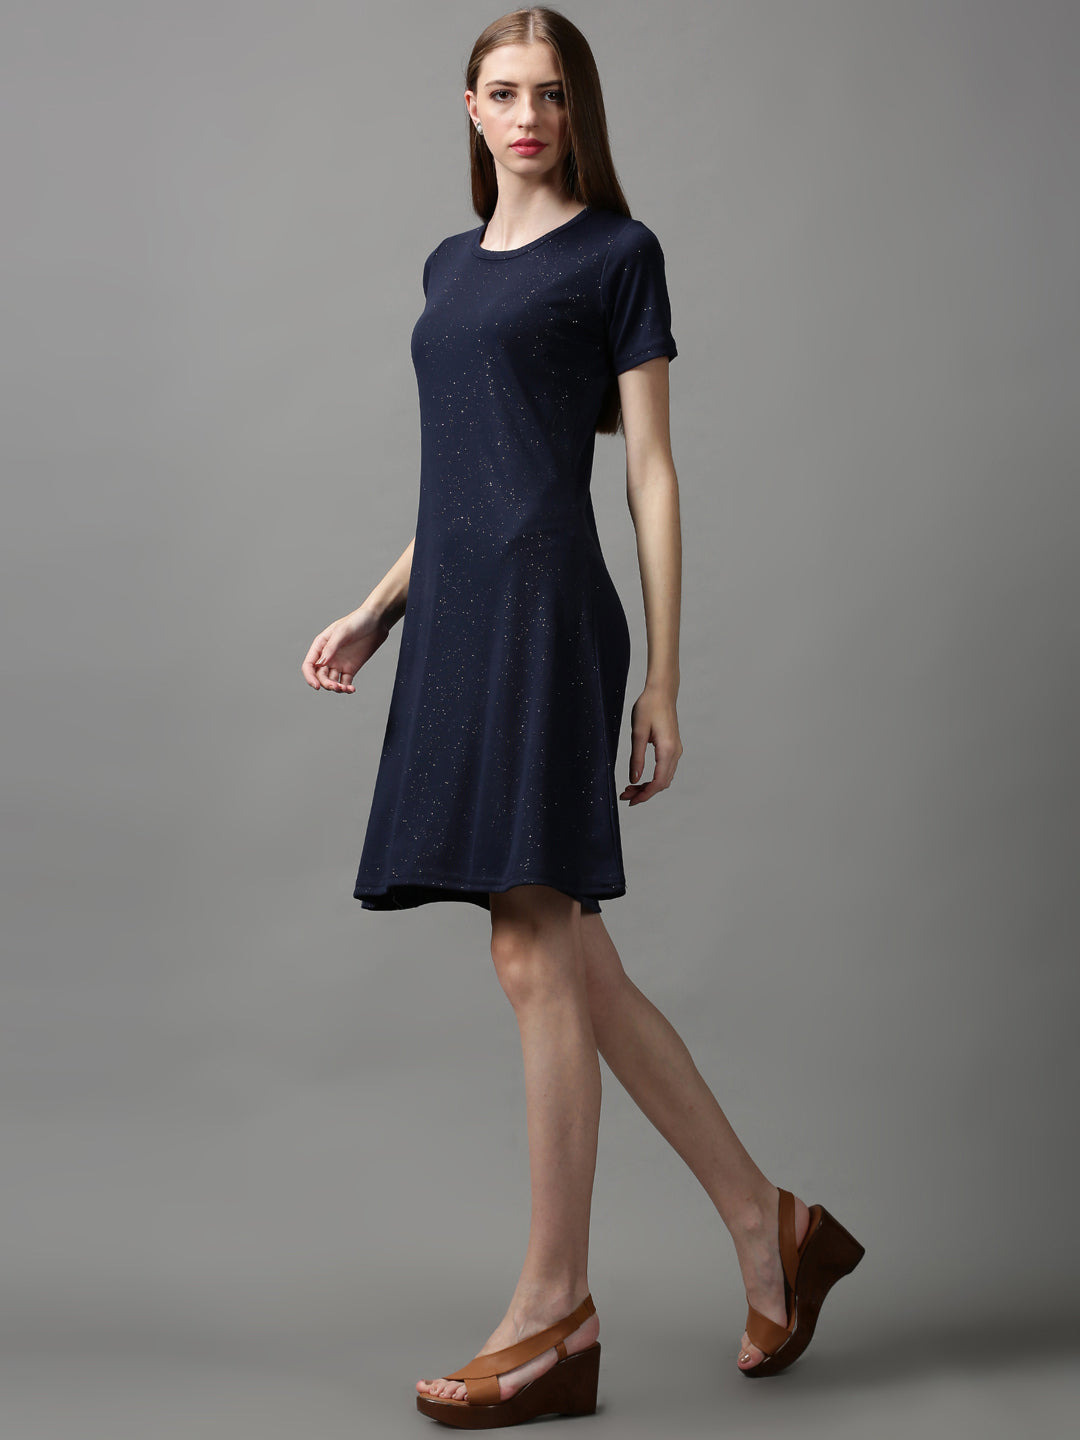 Women's Blue Embellished A-Line Dress